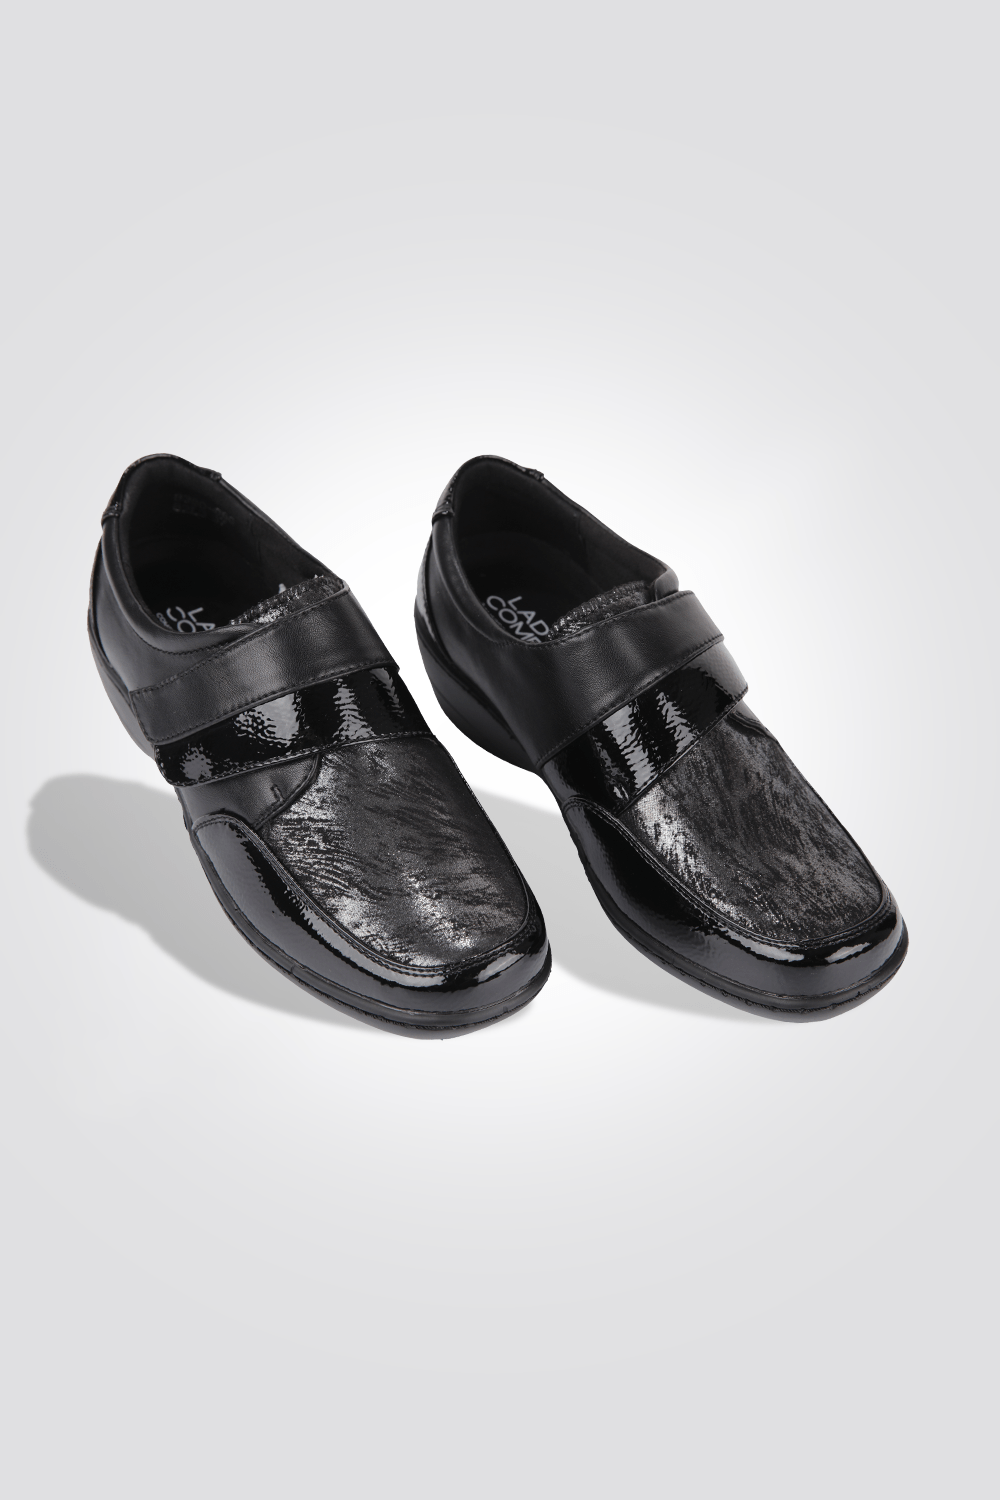 LADY COMFORT - נעל עם סקוטצ דמוי עור בצבע שחור - MASHBIR//365